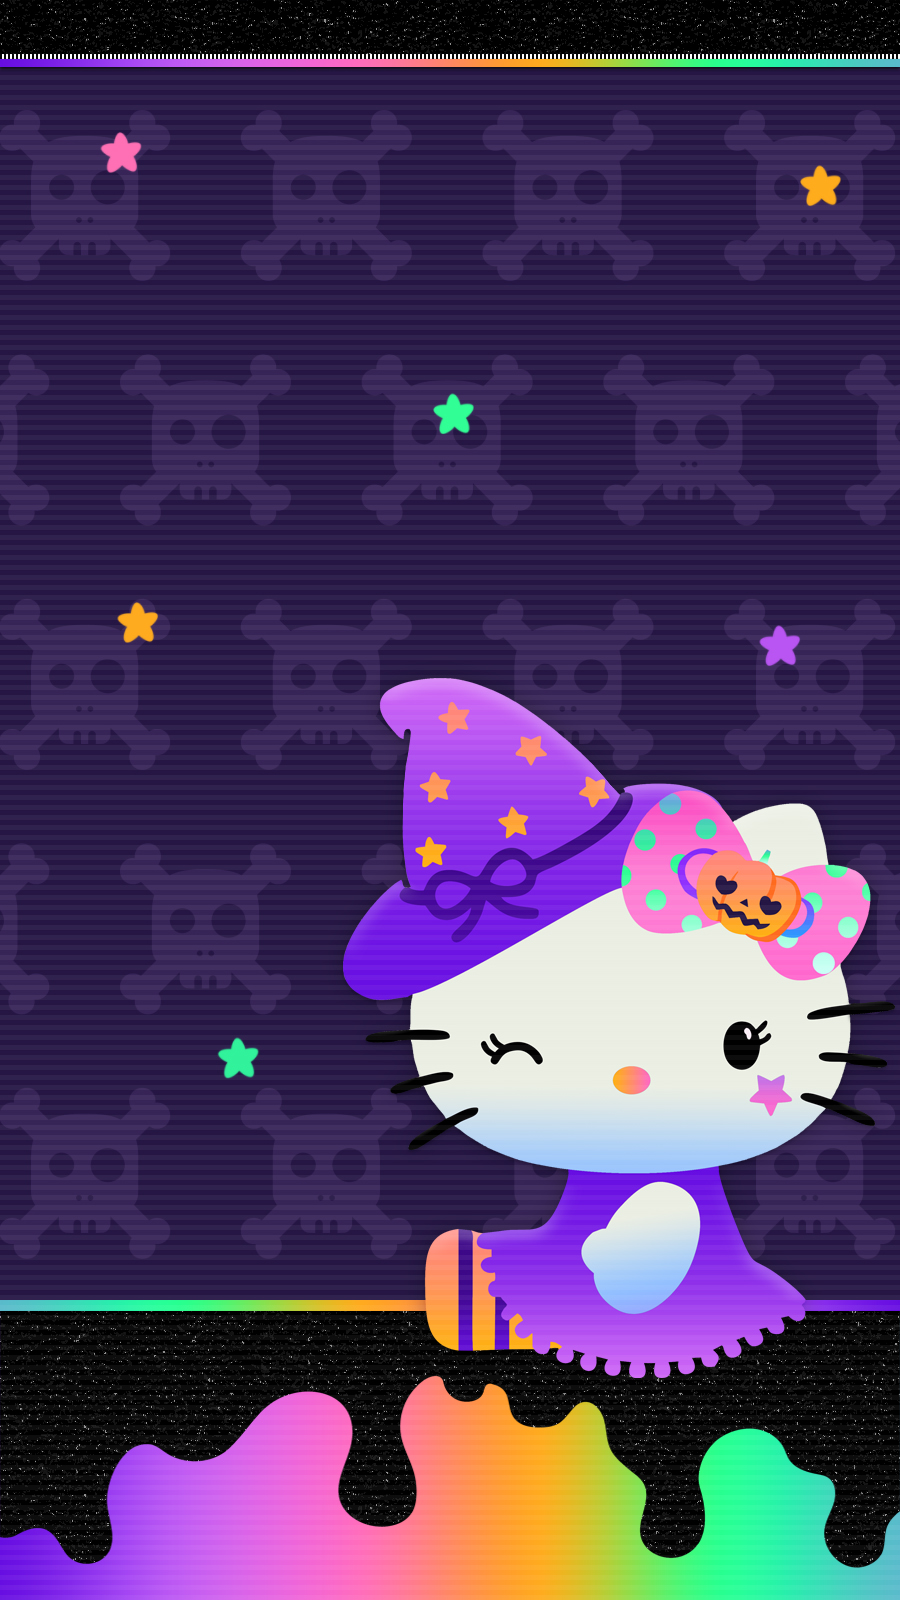 Cute Walls ♡: Hello kitty Halloween wallpaper set